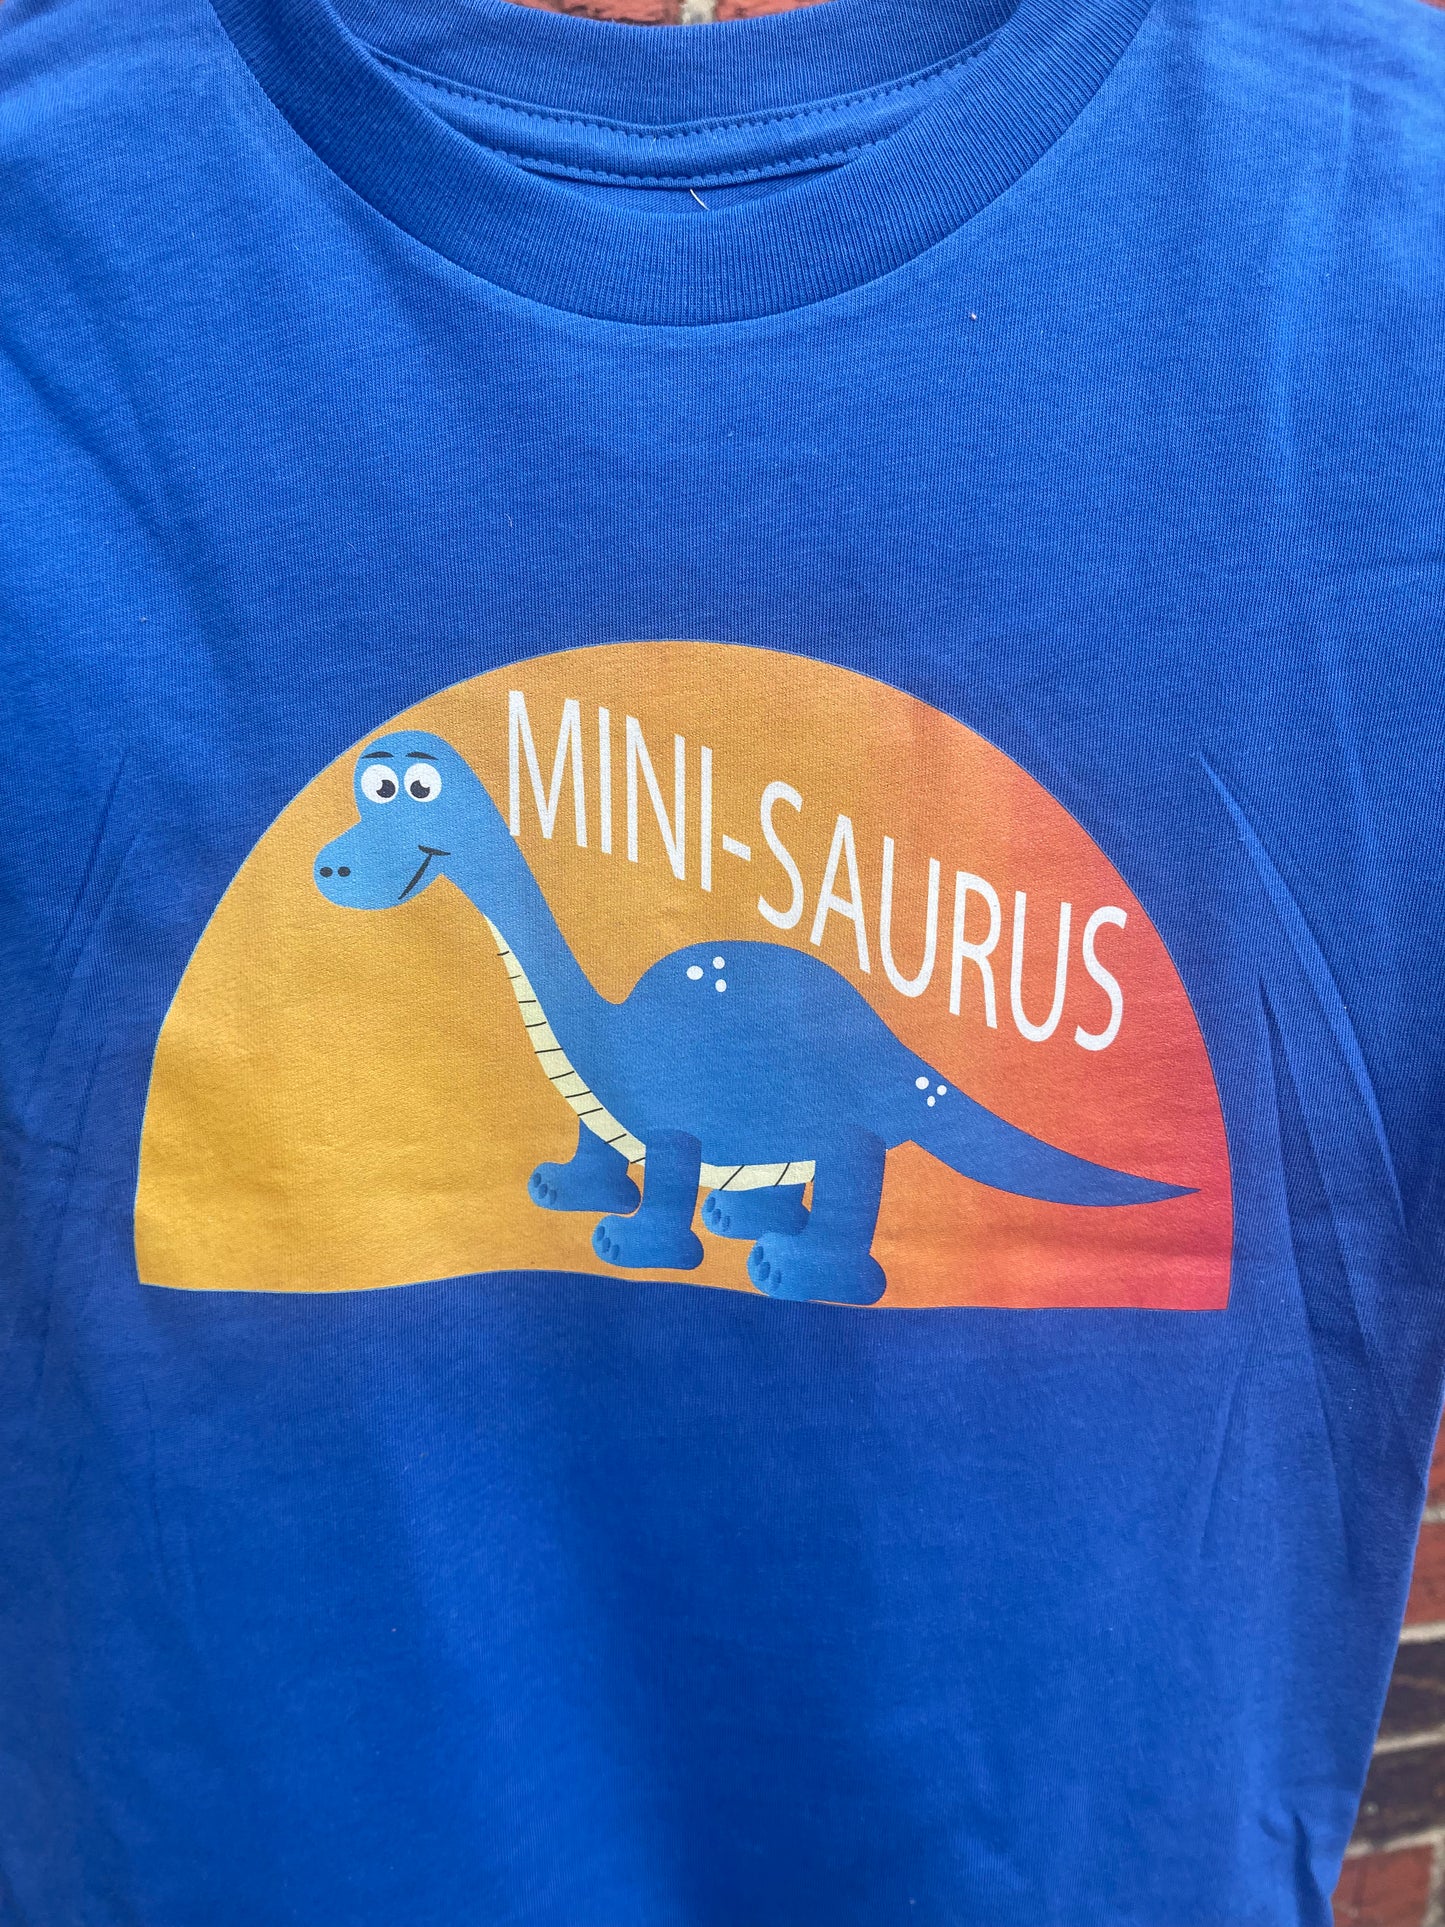 Mini-Saurus